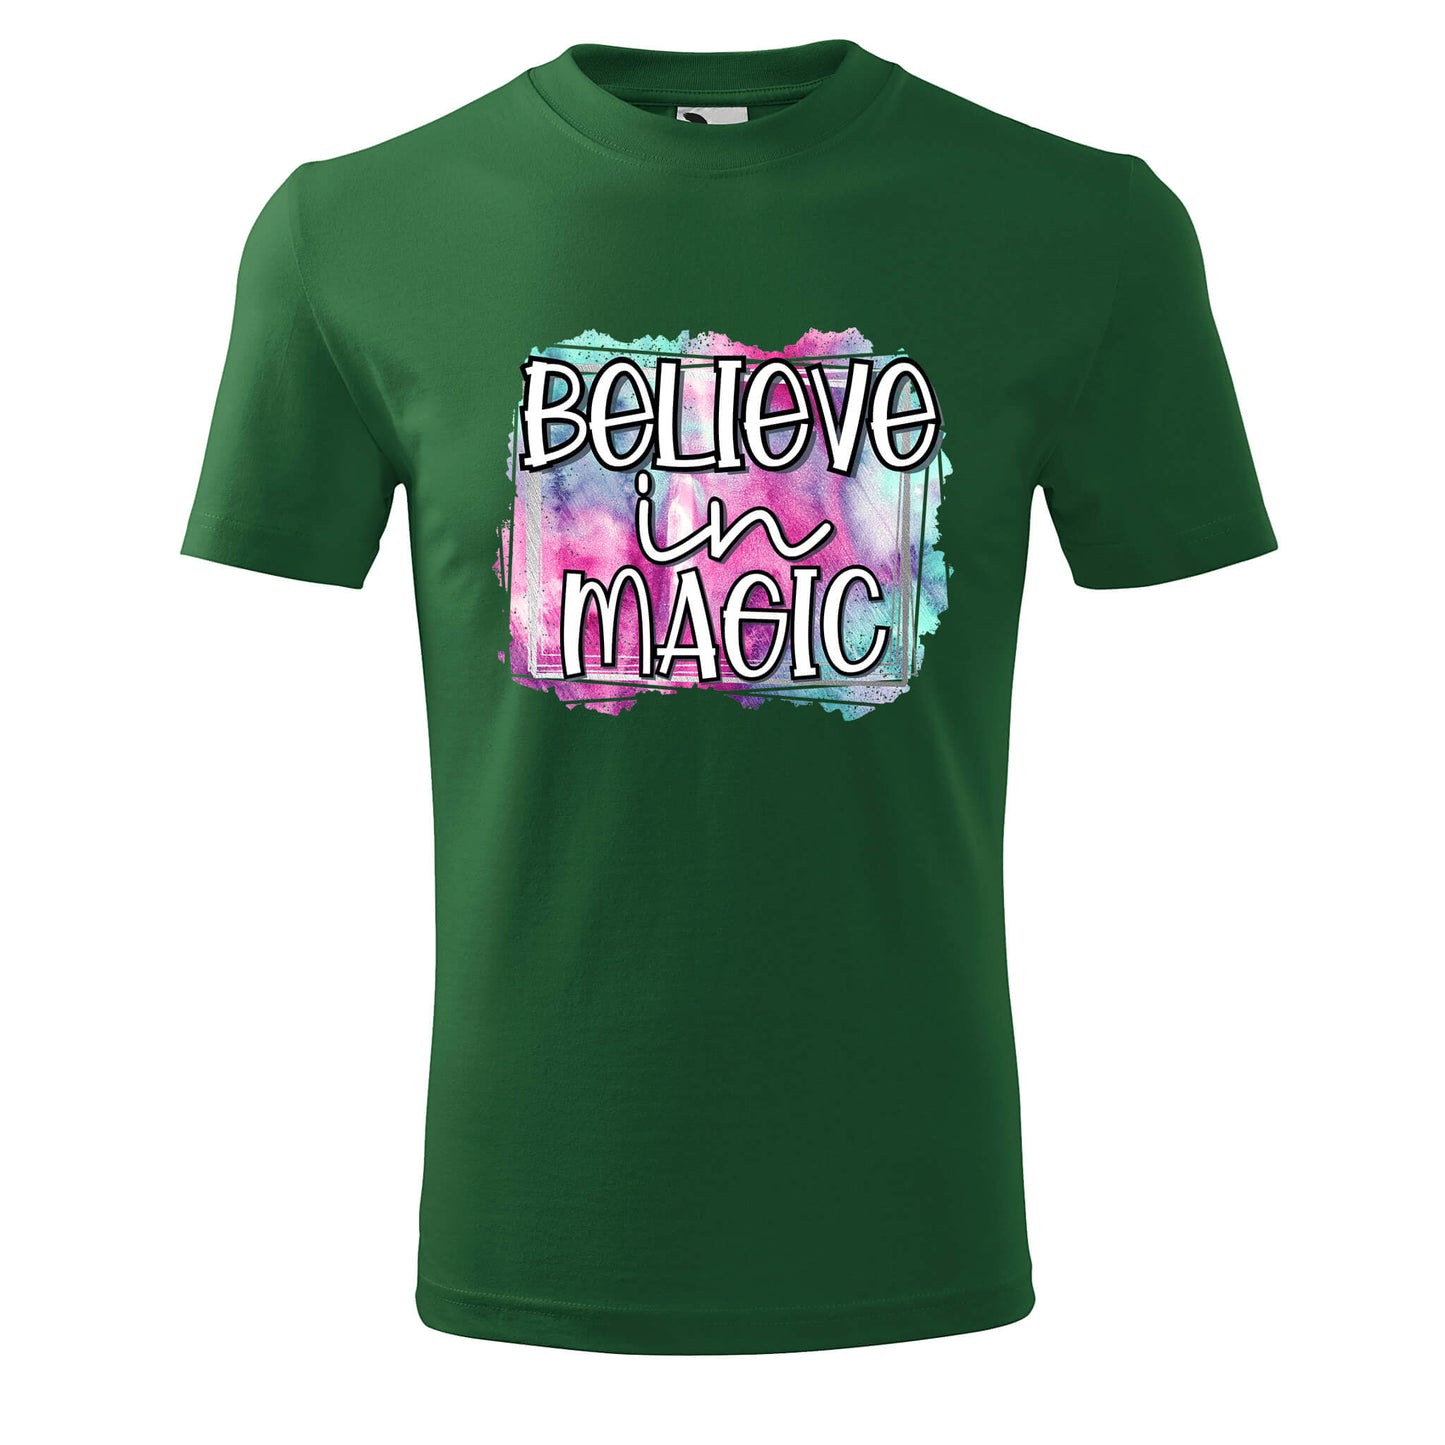 Believe in magic t-shirt - rvdesignprint